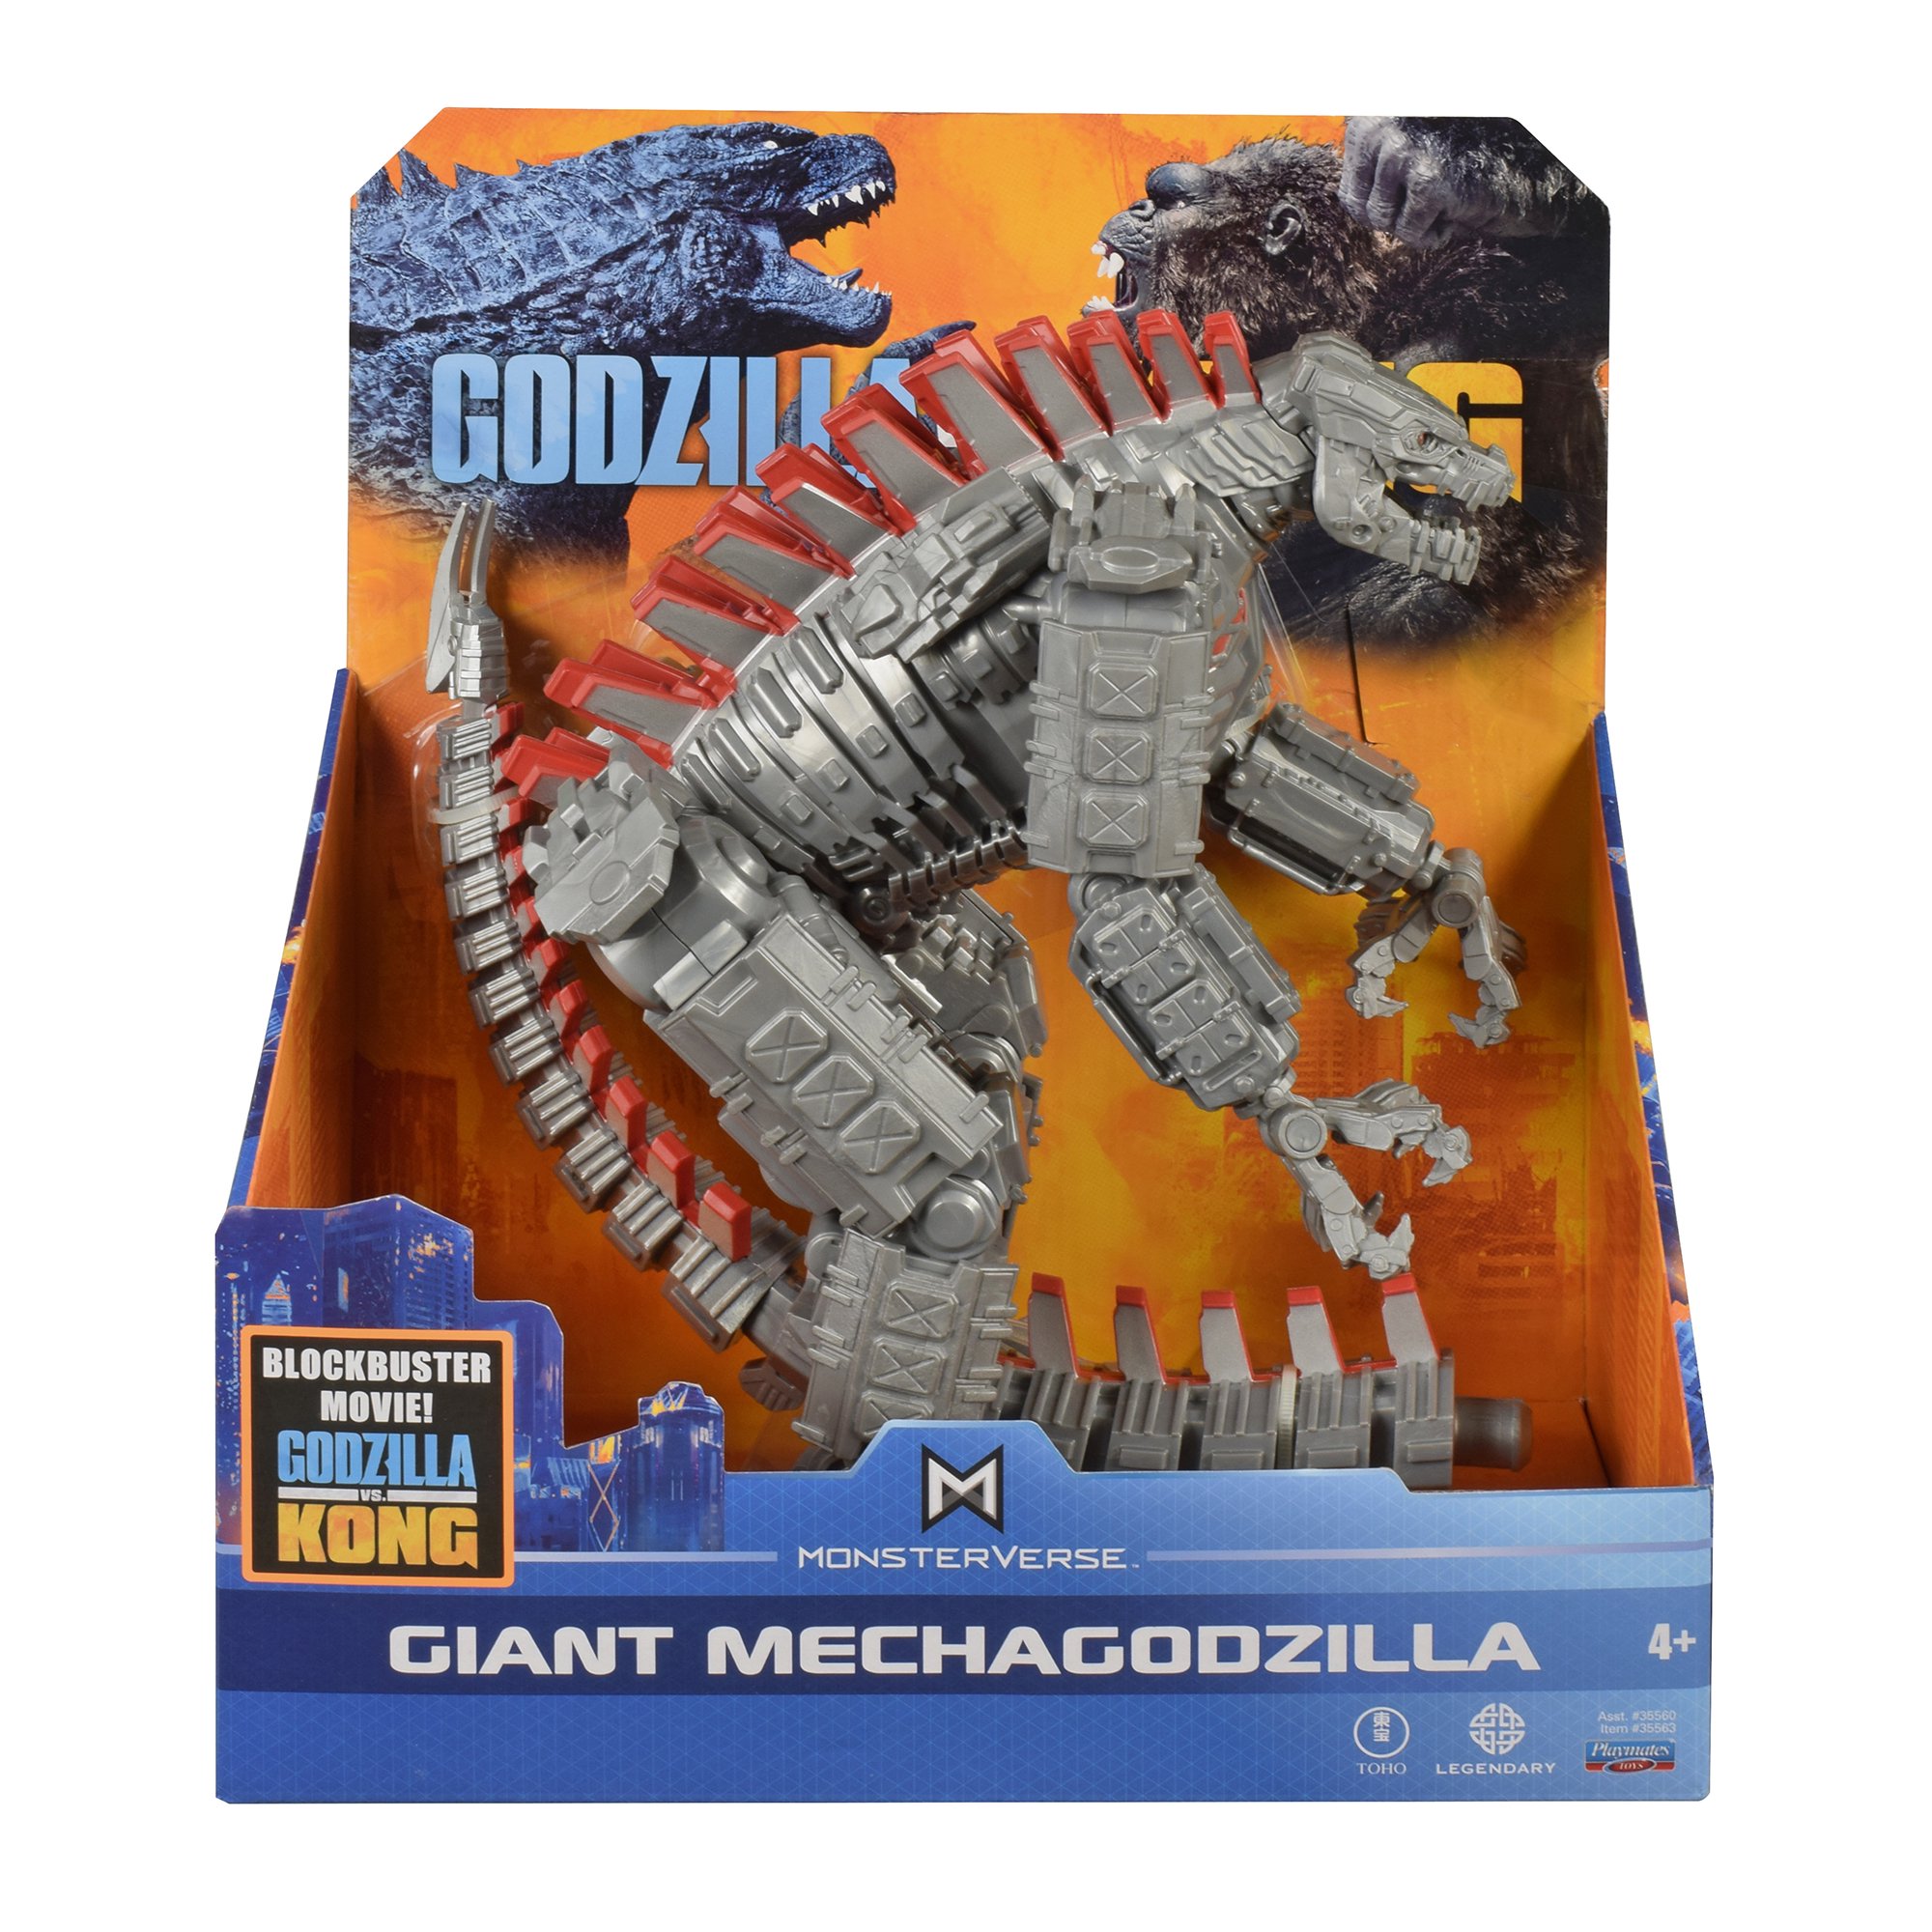 Space Godzilla Vinyl Figure 10" Long 7" Tall Playmates Toys 2020 New in Box 